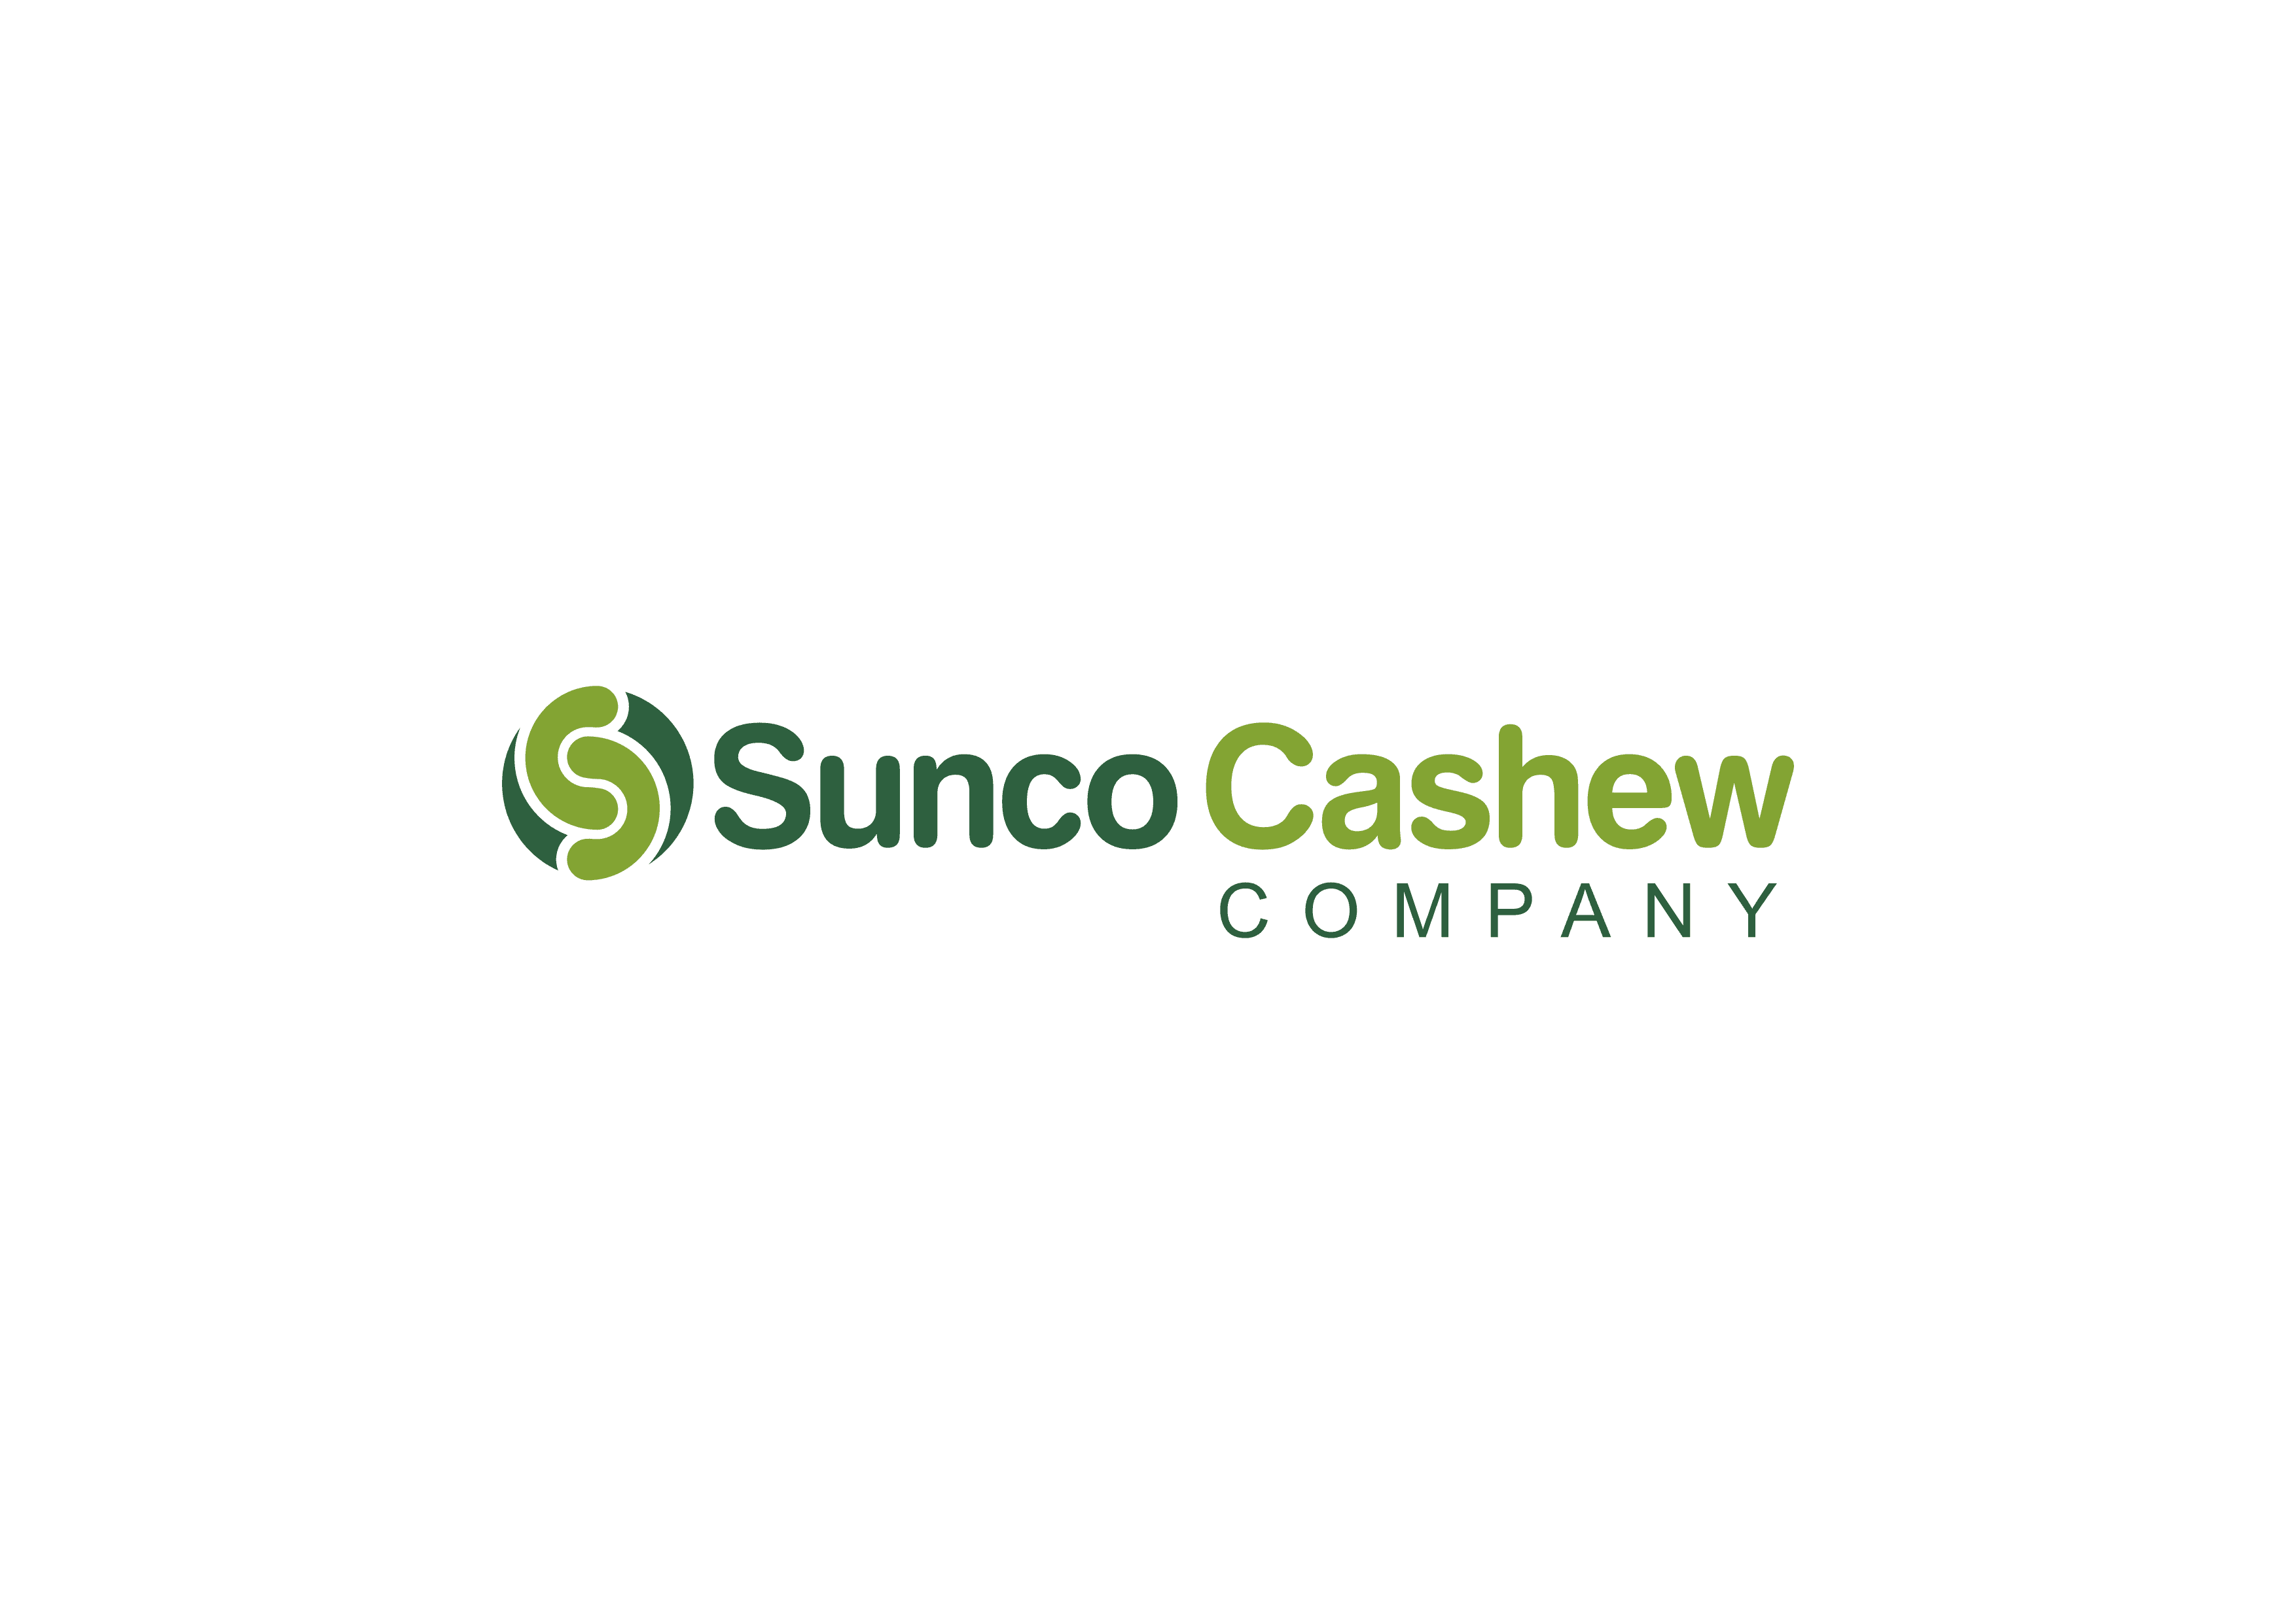 SUNCO CASHEW COMPANY